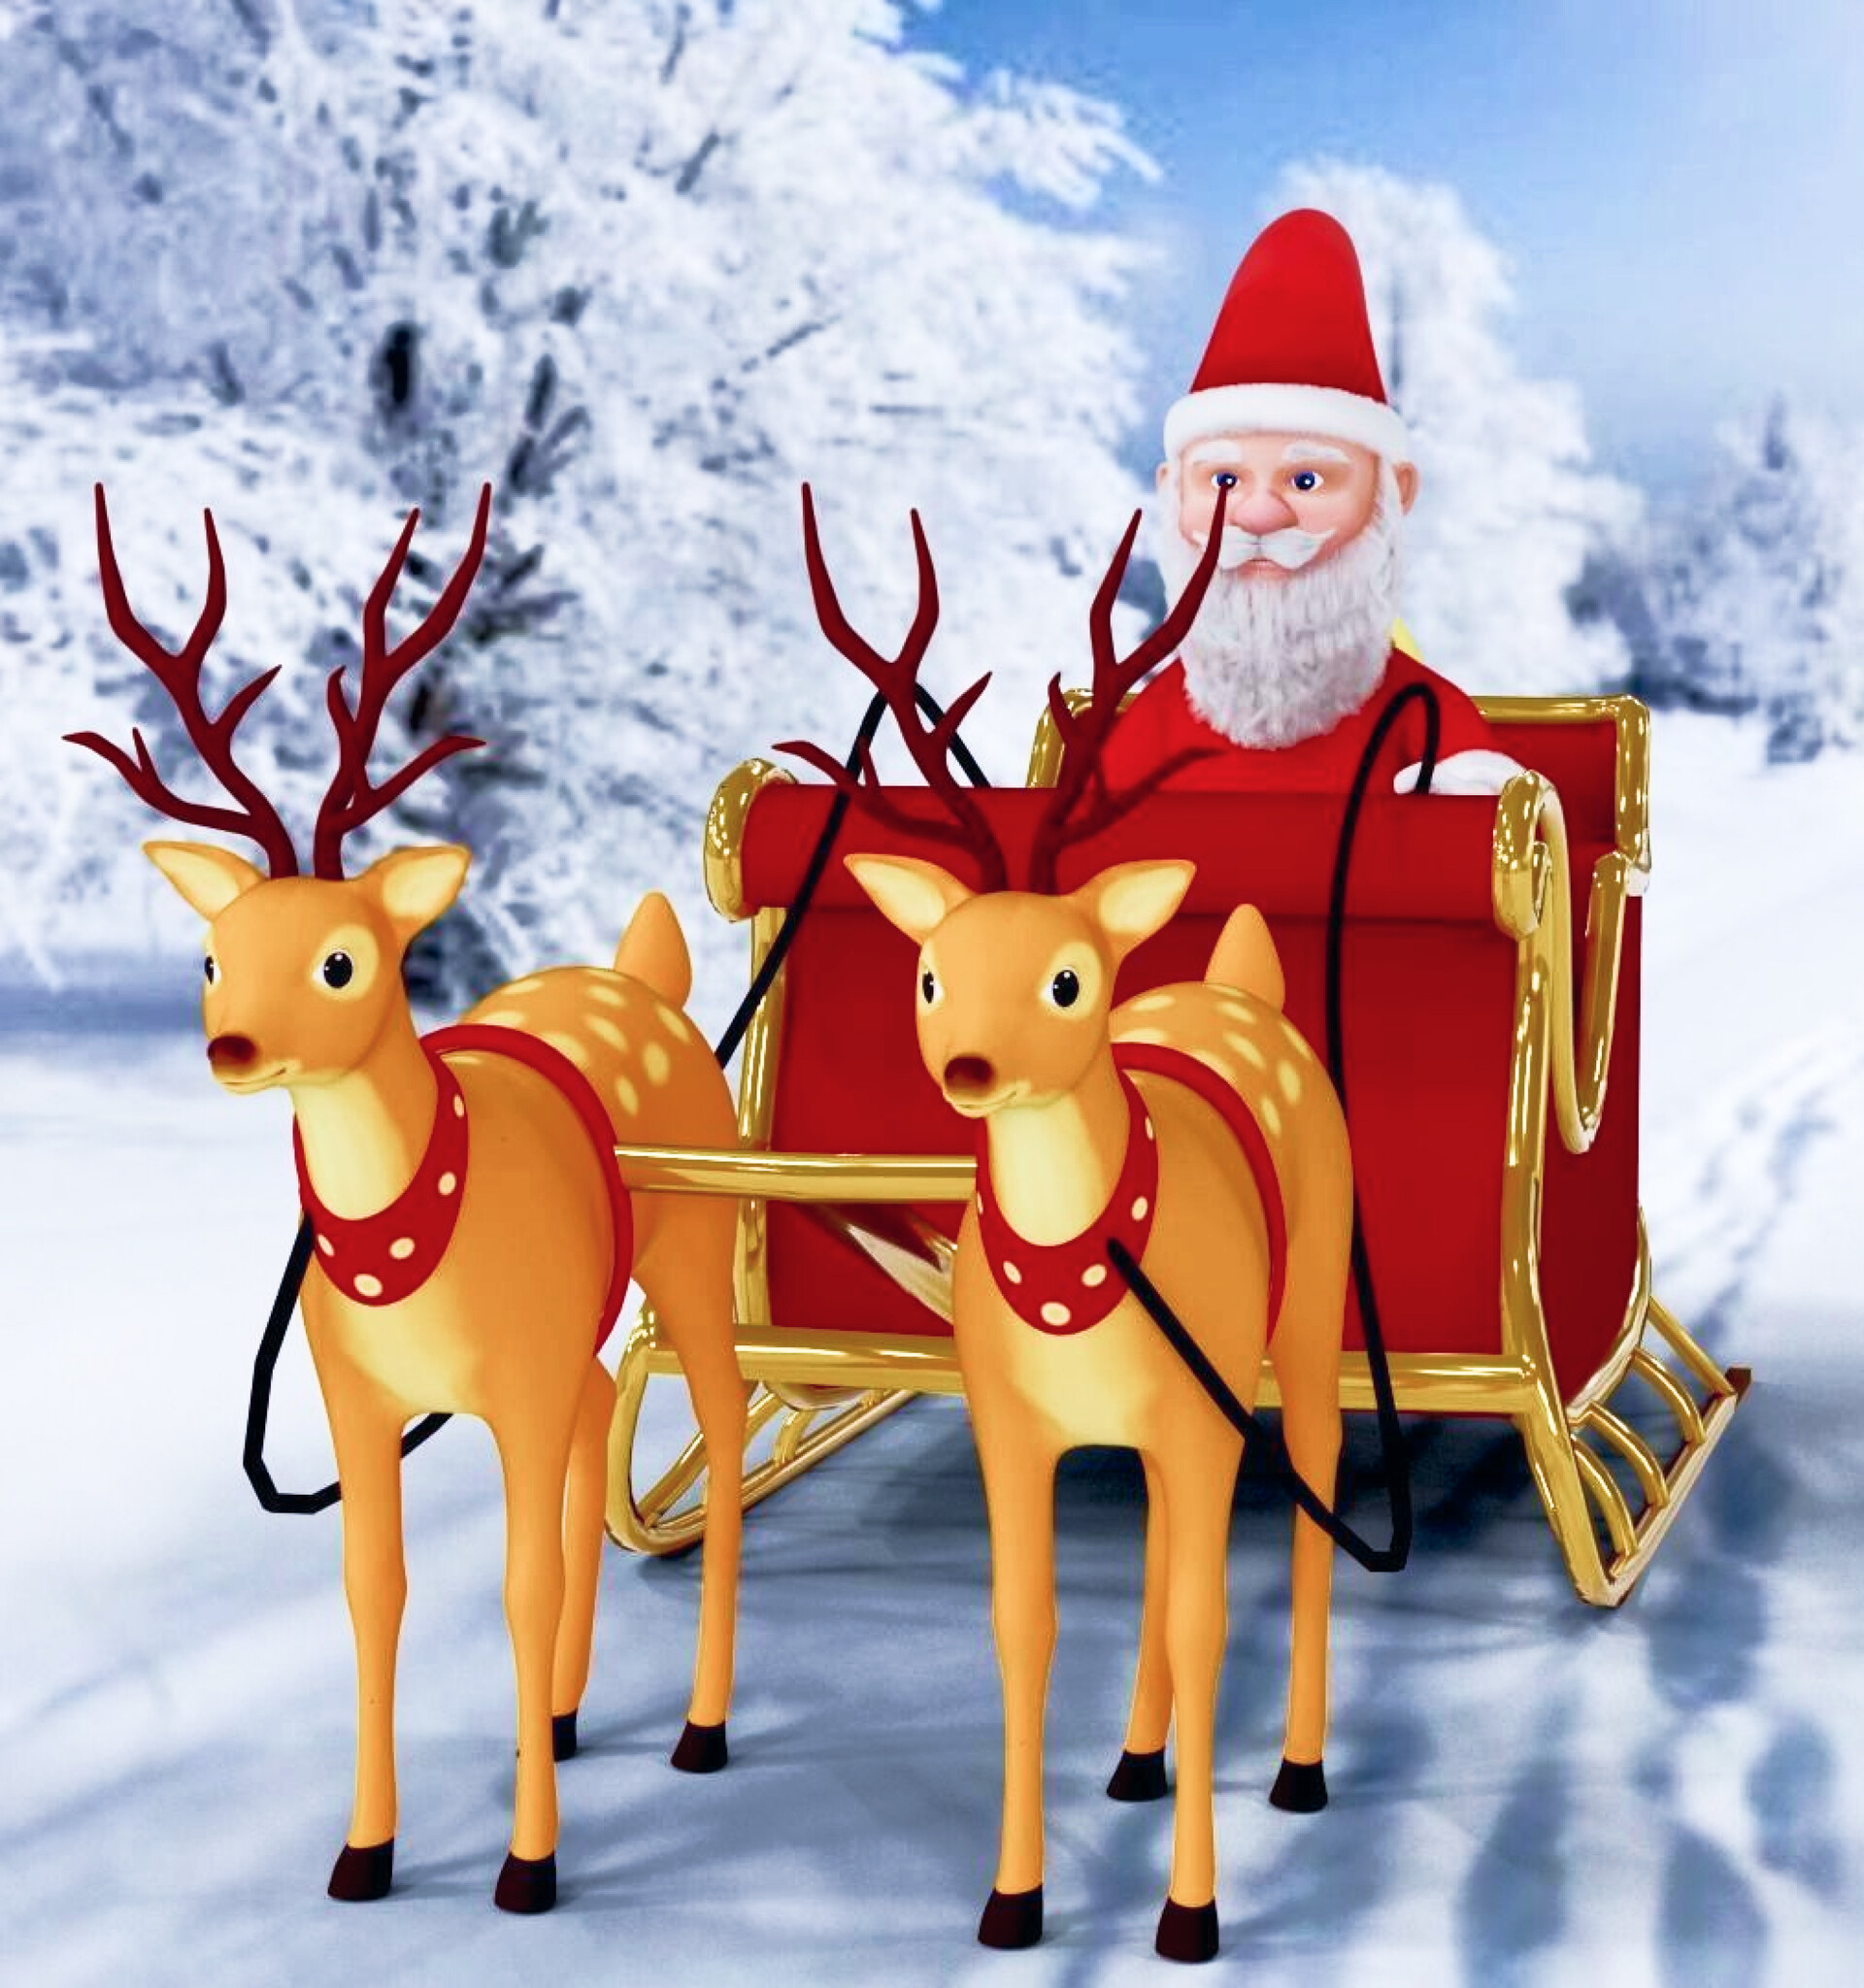 ArtStation - Fur Cartoon Santa Claus with deer